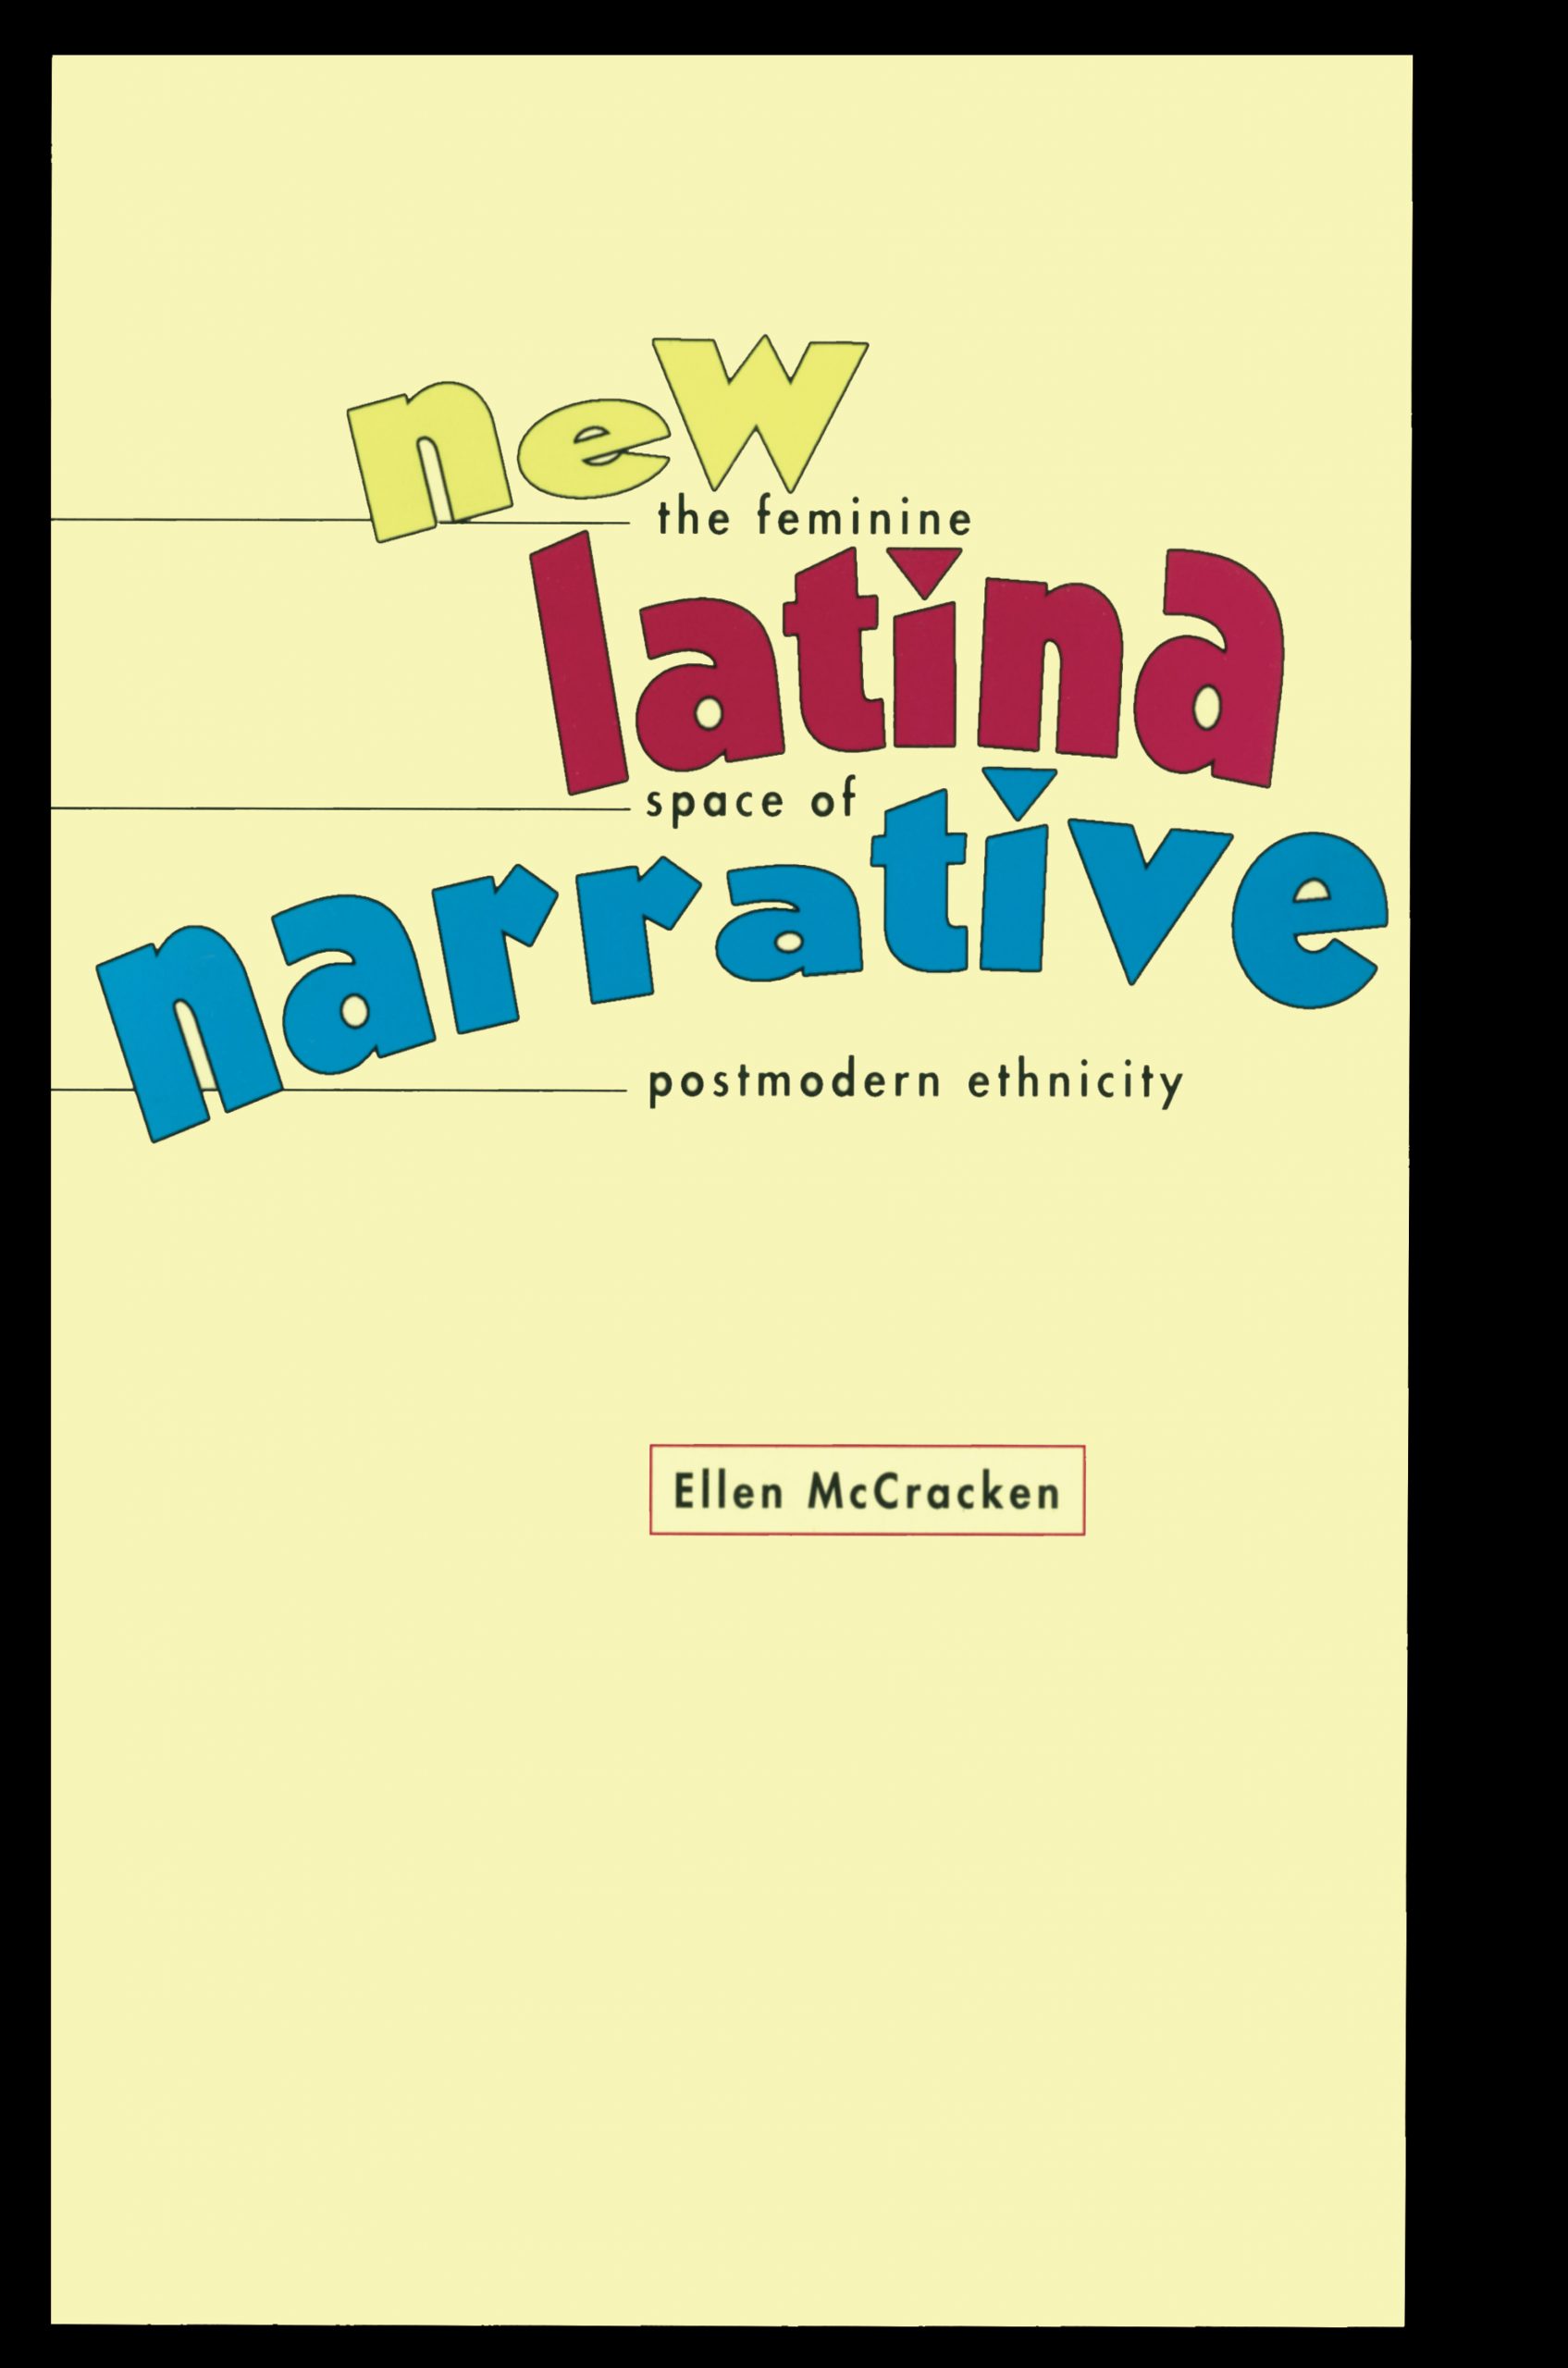 New Latina Narrative